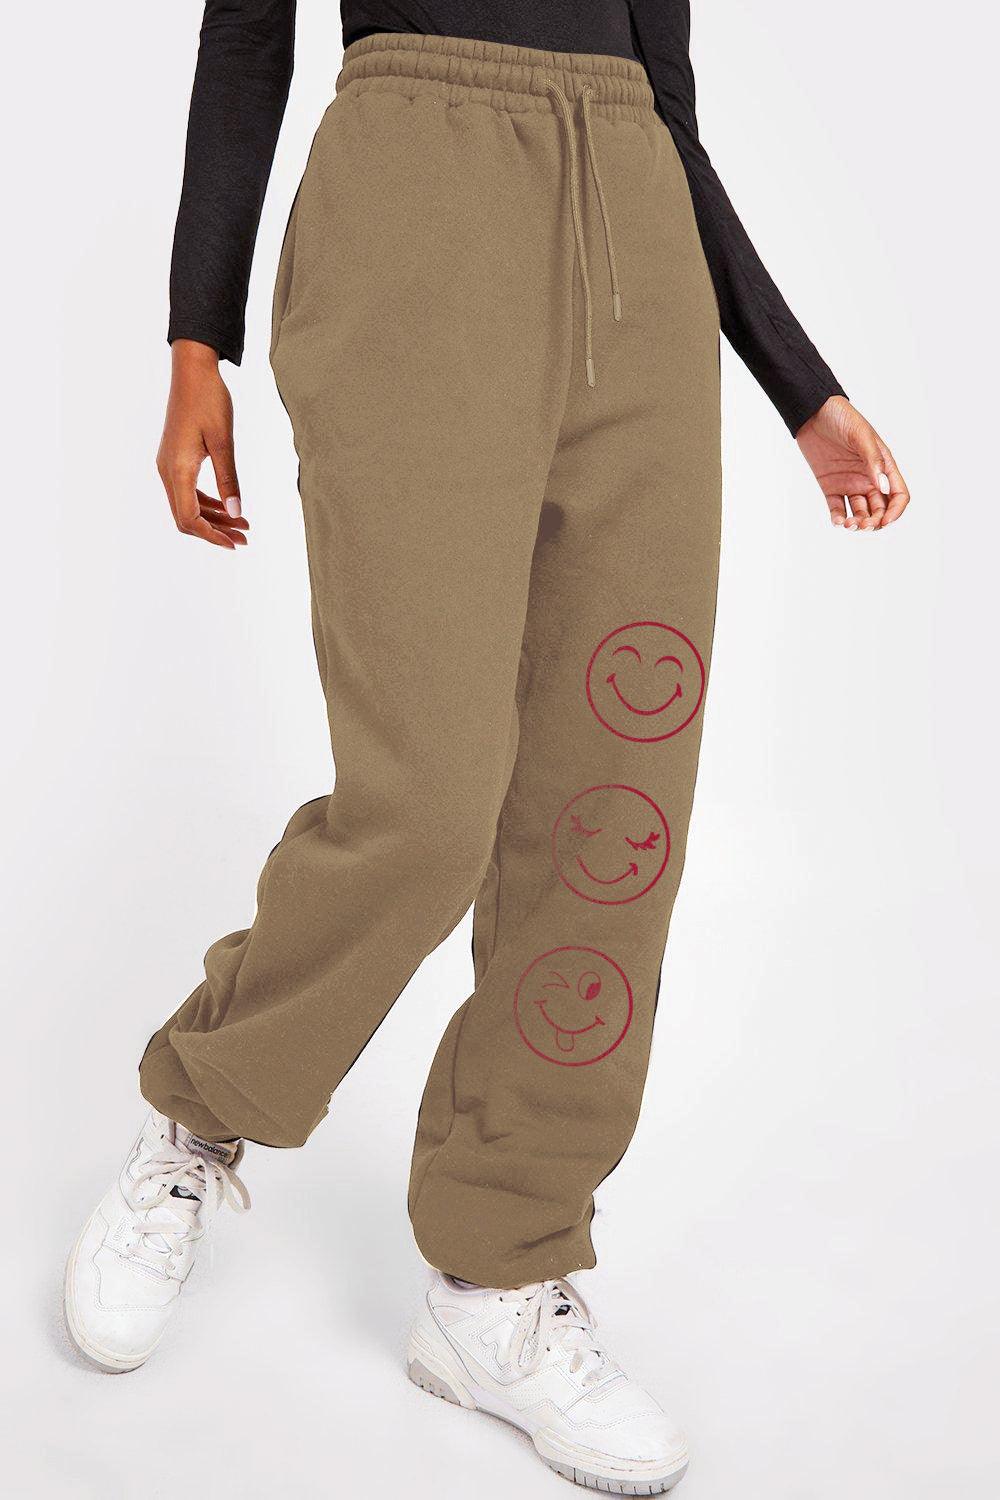 Simply Love Full Size Emoji Graphic Sweatpants - Lab Fashion, Home & Health